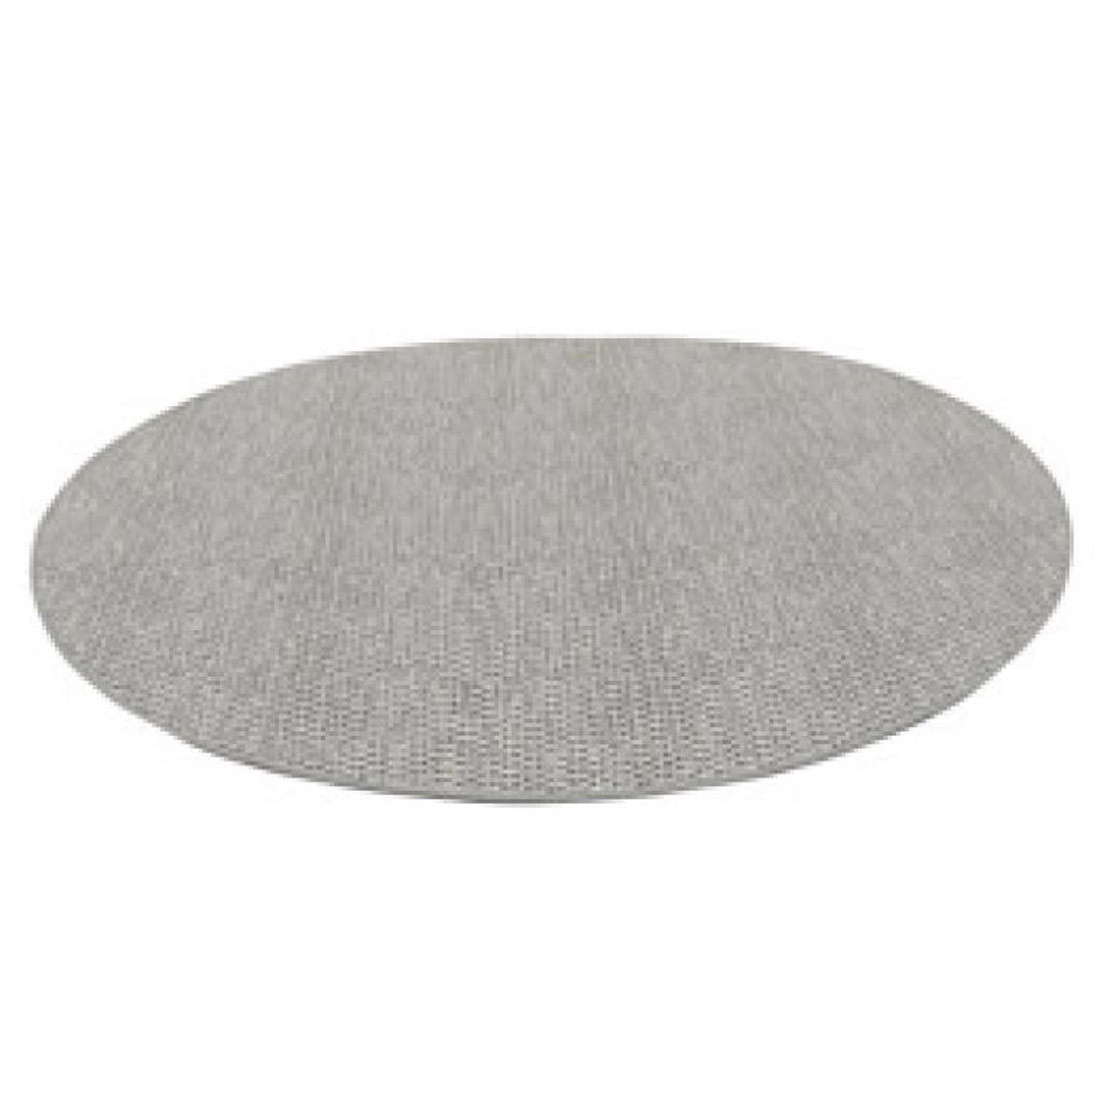 Outdoor rug 150 cm. Round Grey